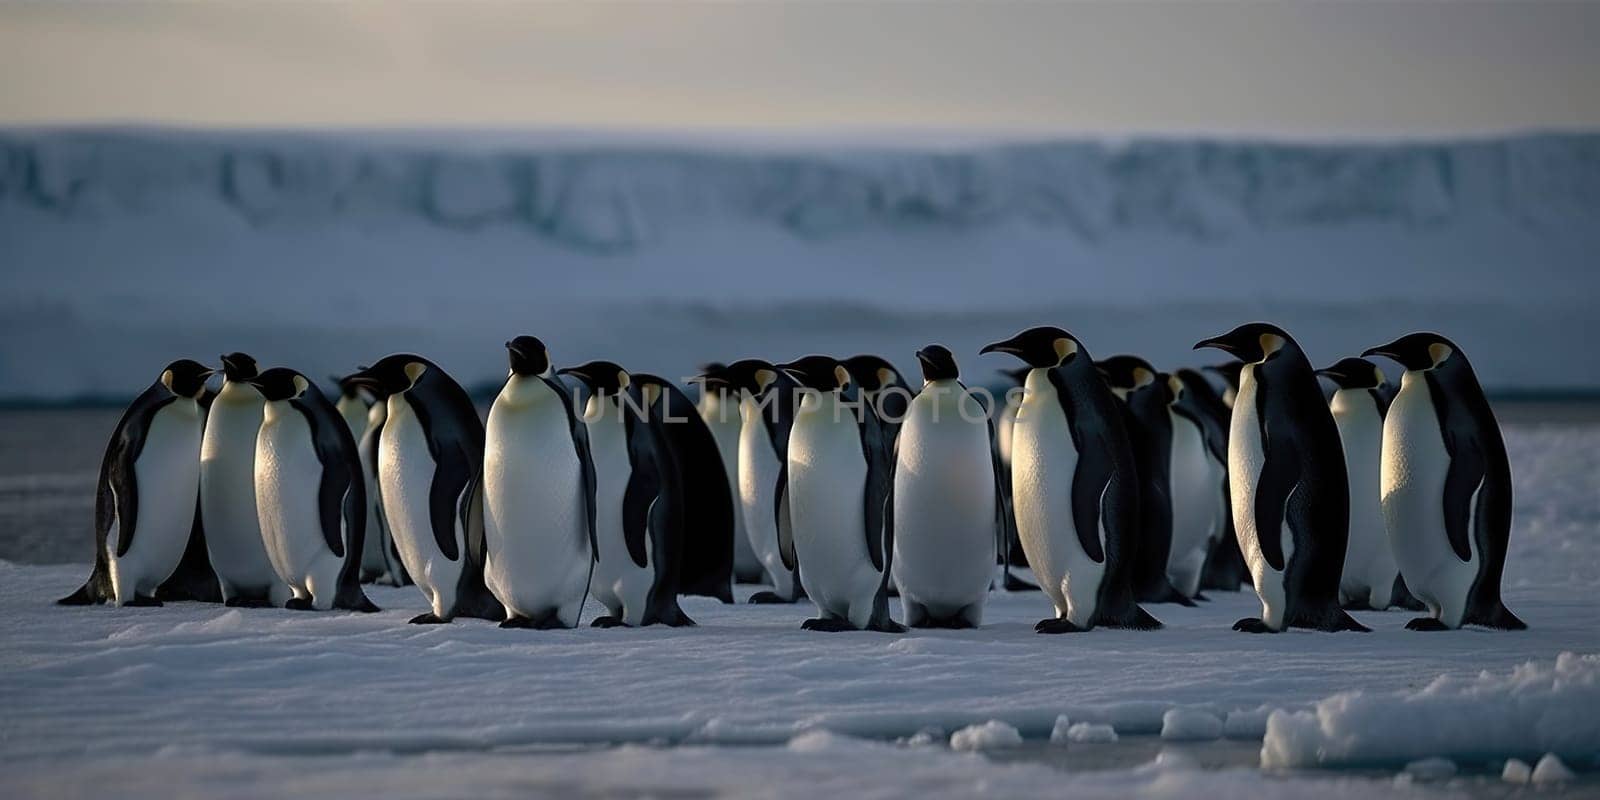 Group Of Large Royal Penguins On Ice In Ocean by tan4ikk1